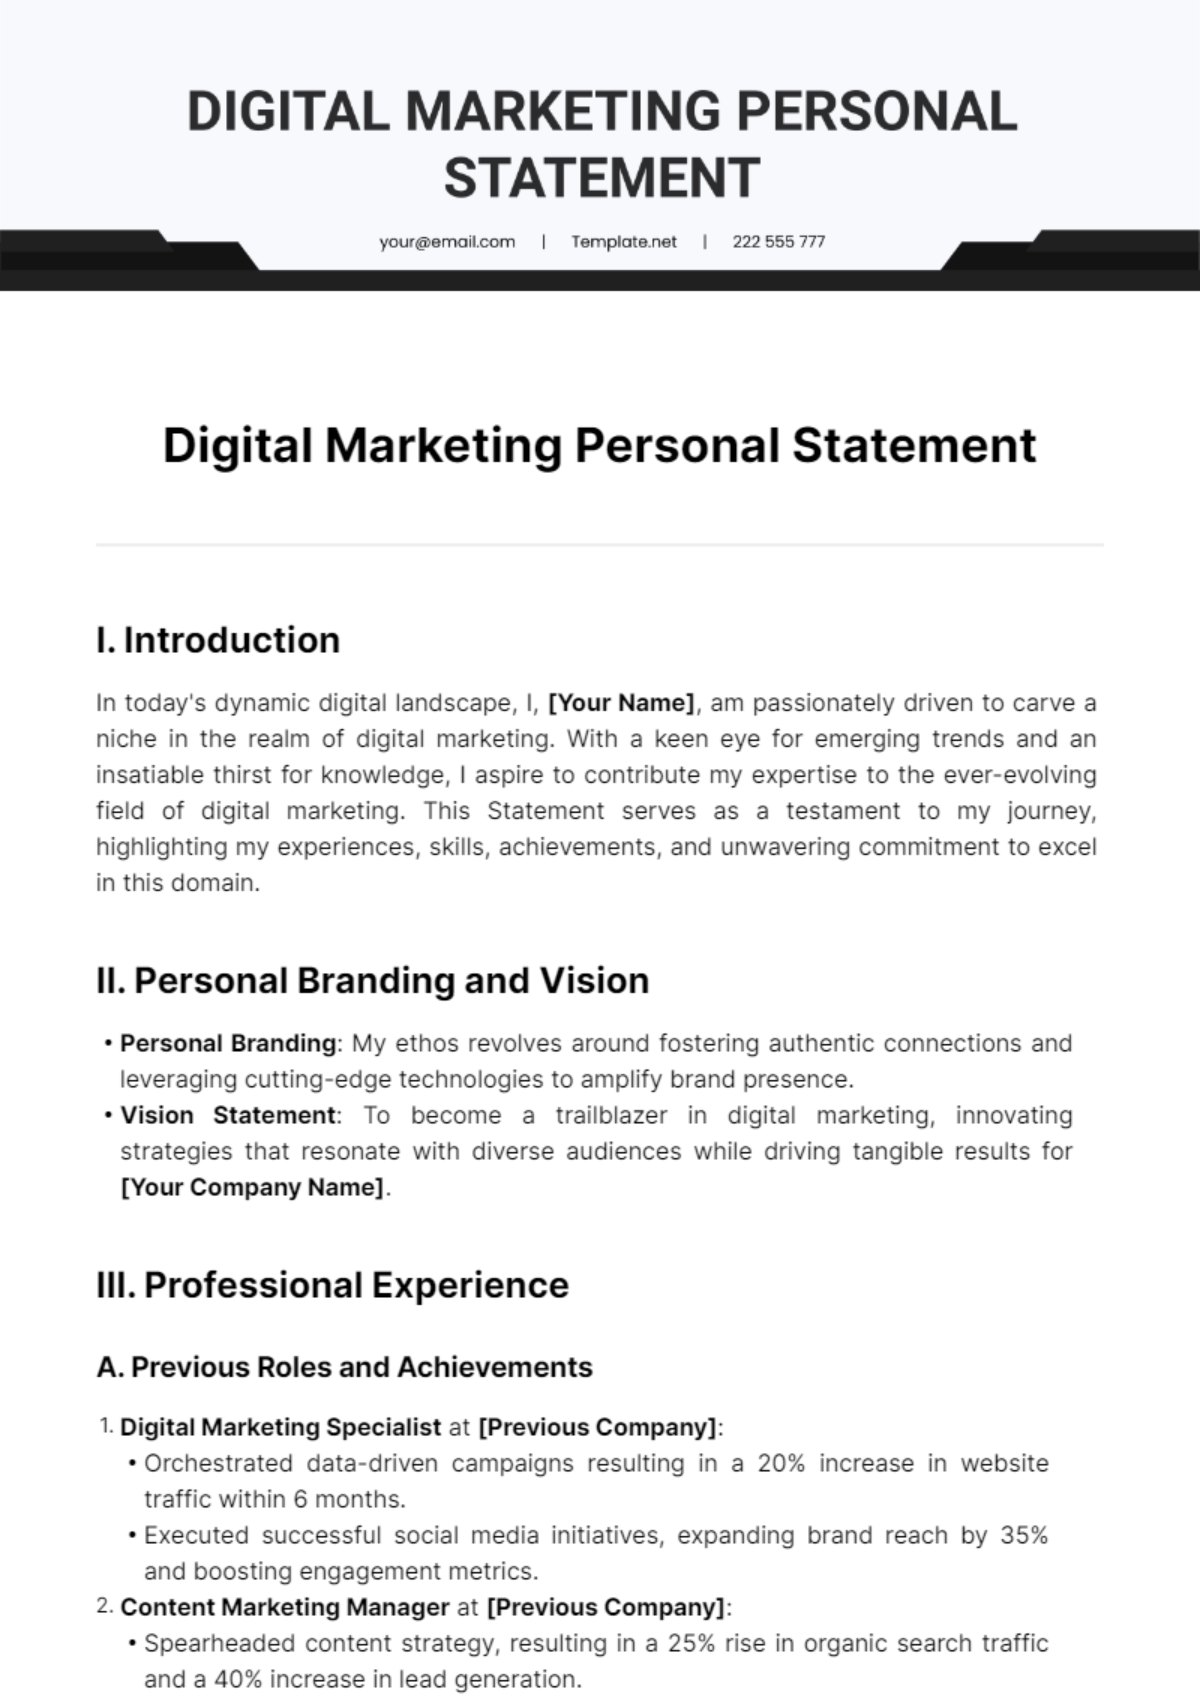 Digital Marketing Personal Statement Template